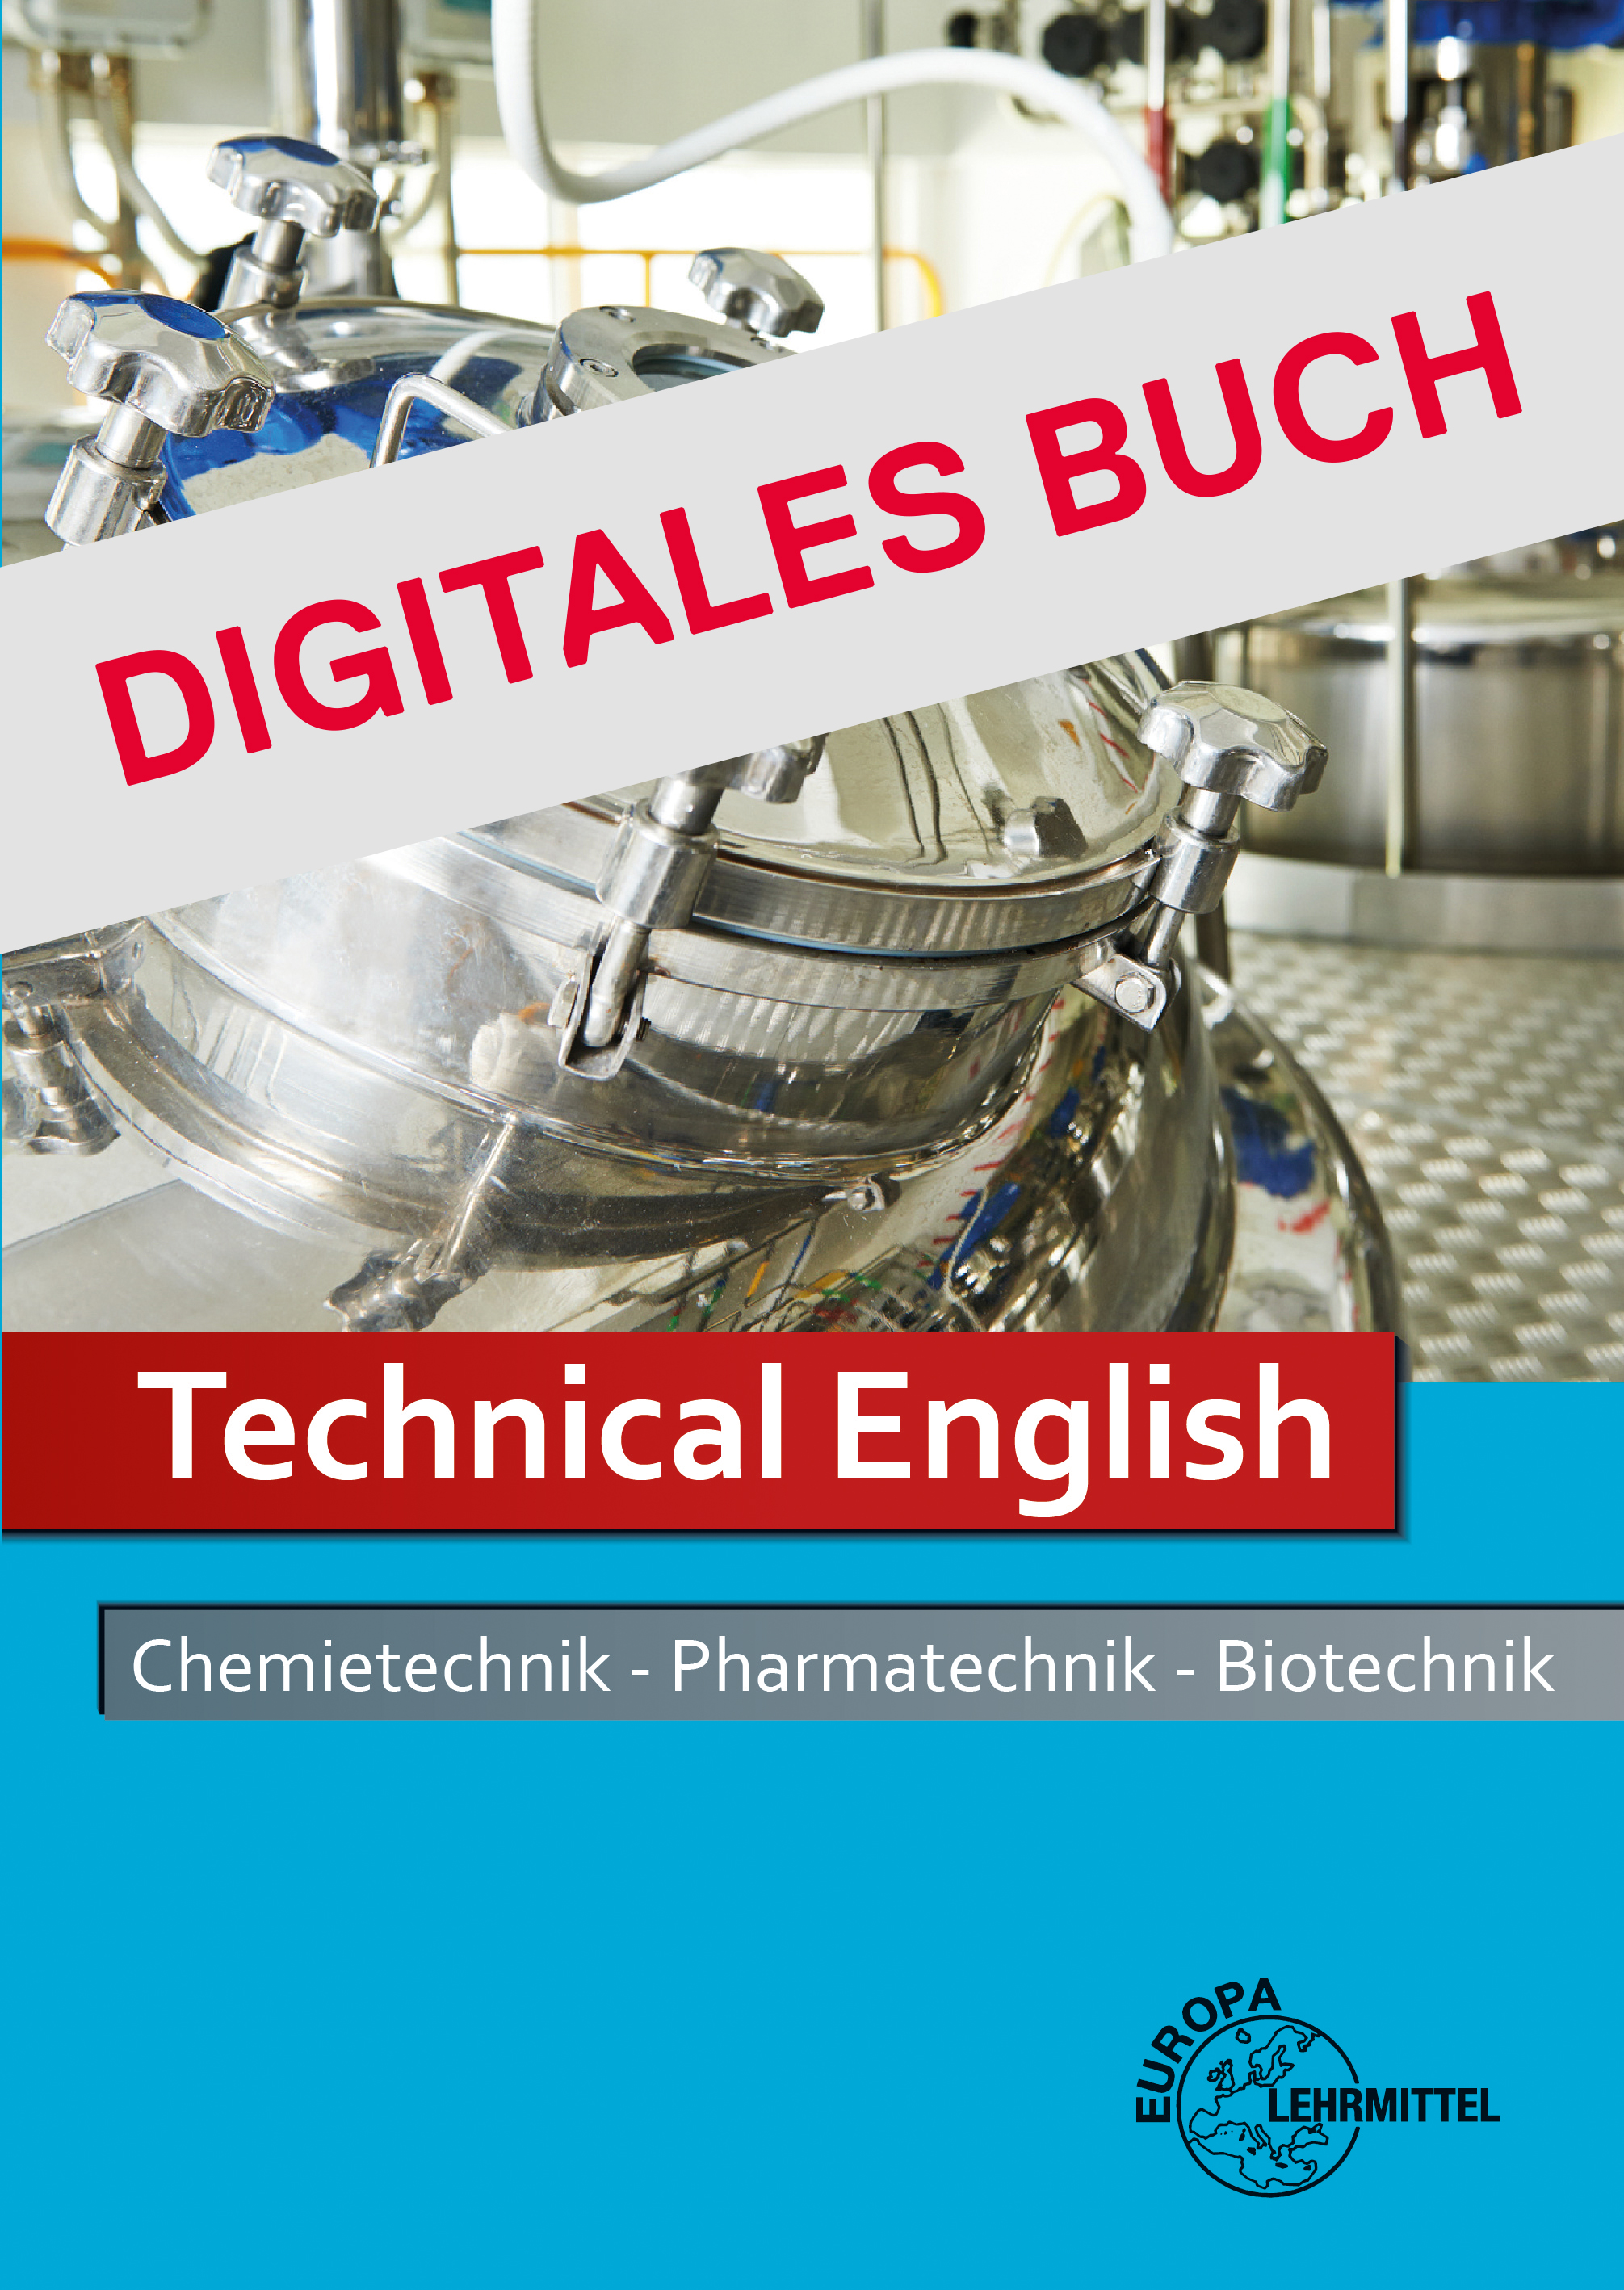 Technical English Chemietechnik Pharmatechnik Biotechnik - Digitales Buch